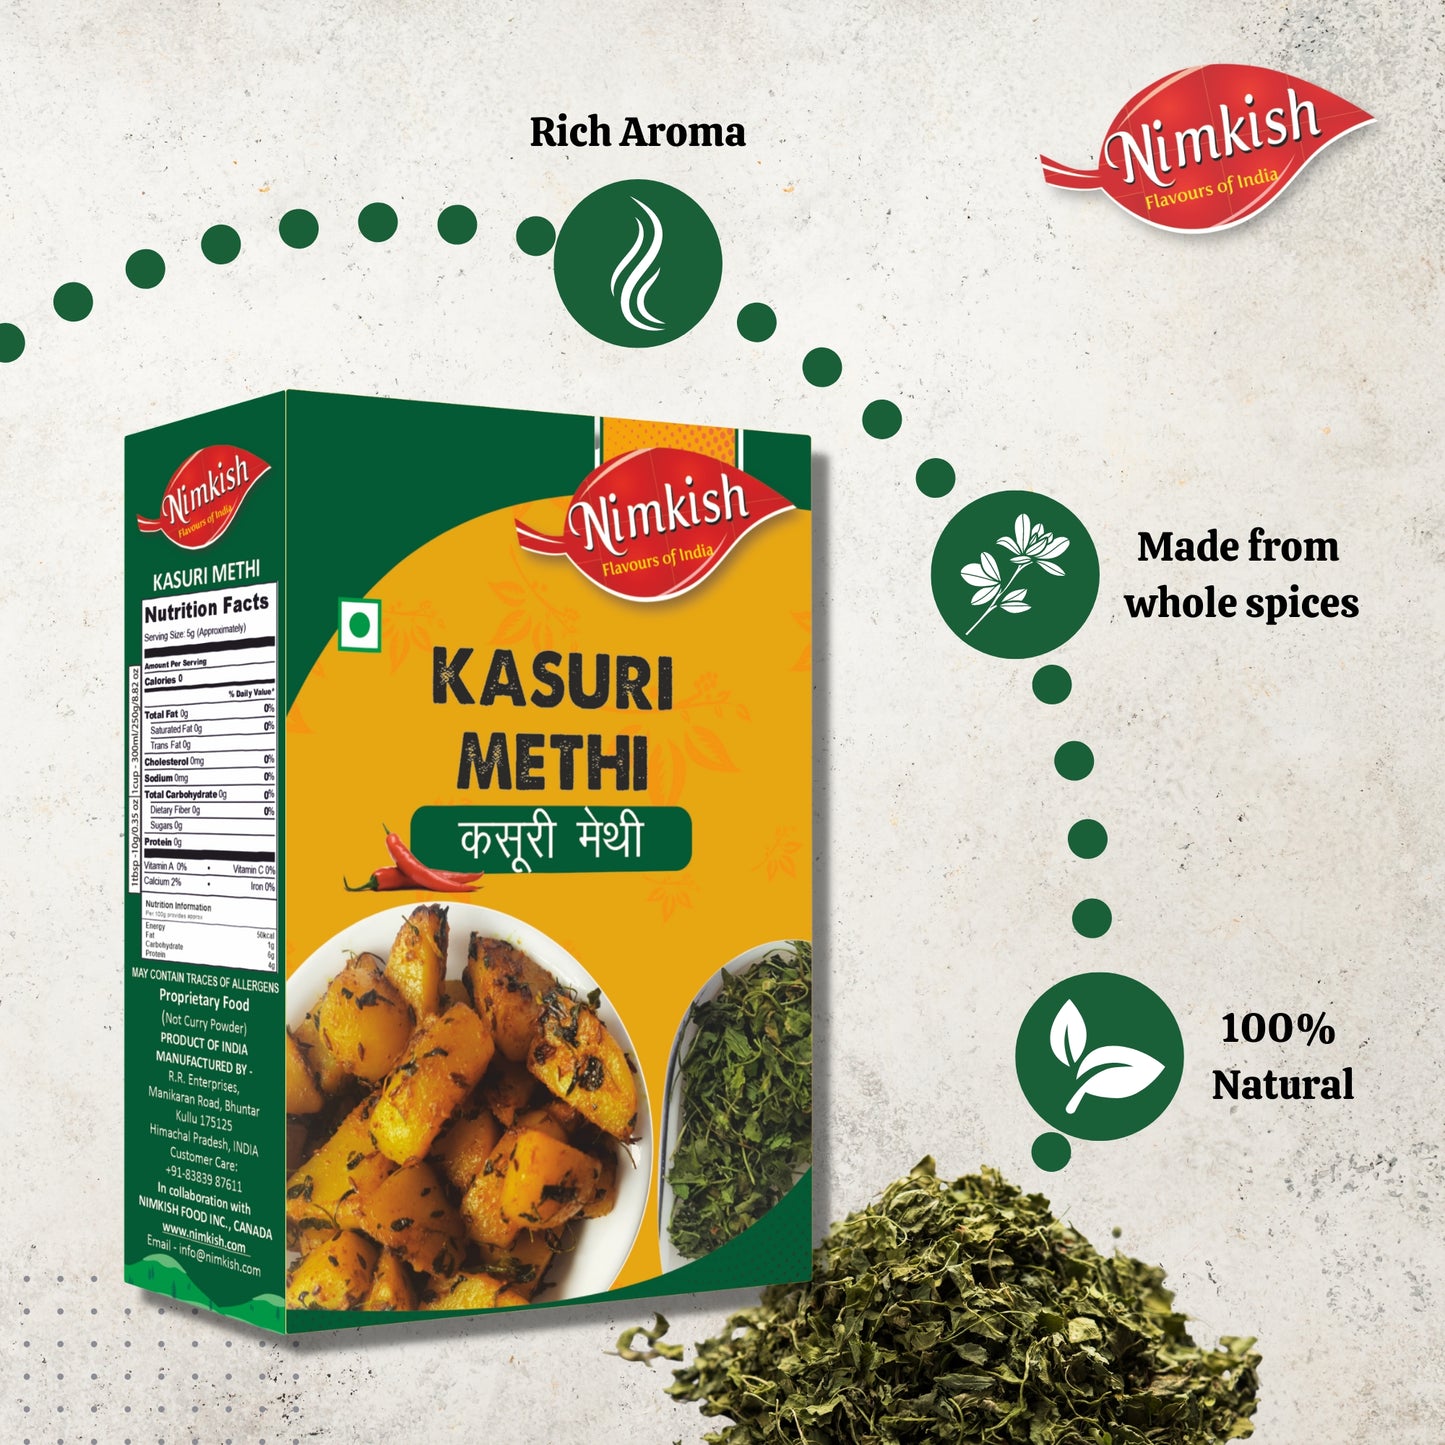 Nimkish Kasuri Methi 25g | Fenugreek Leaves Powder